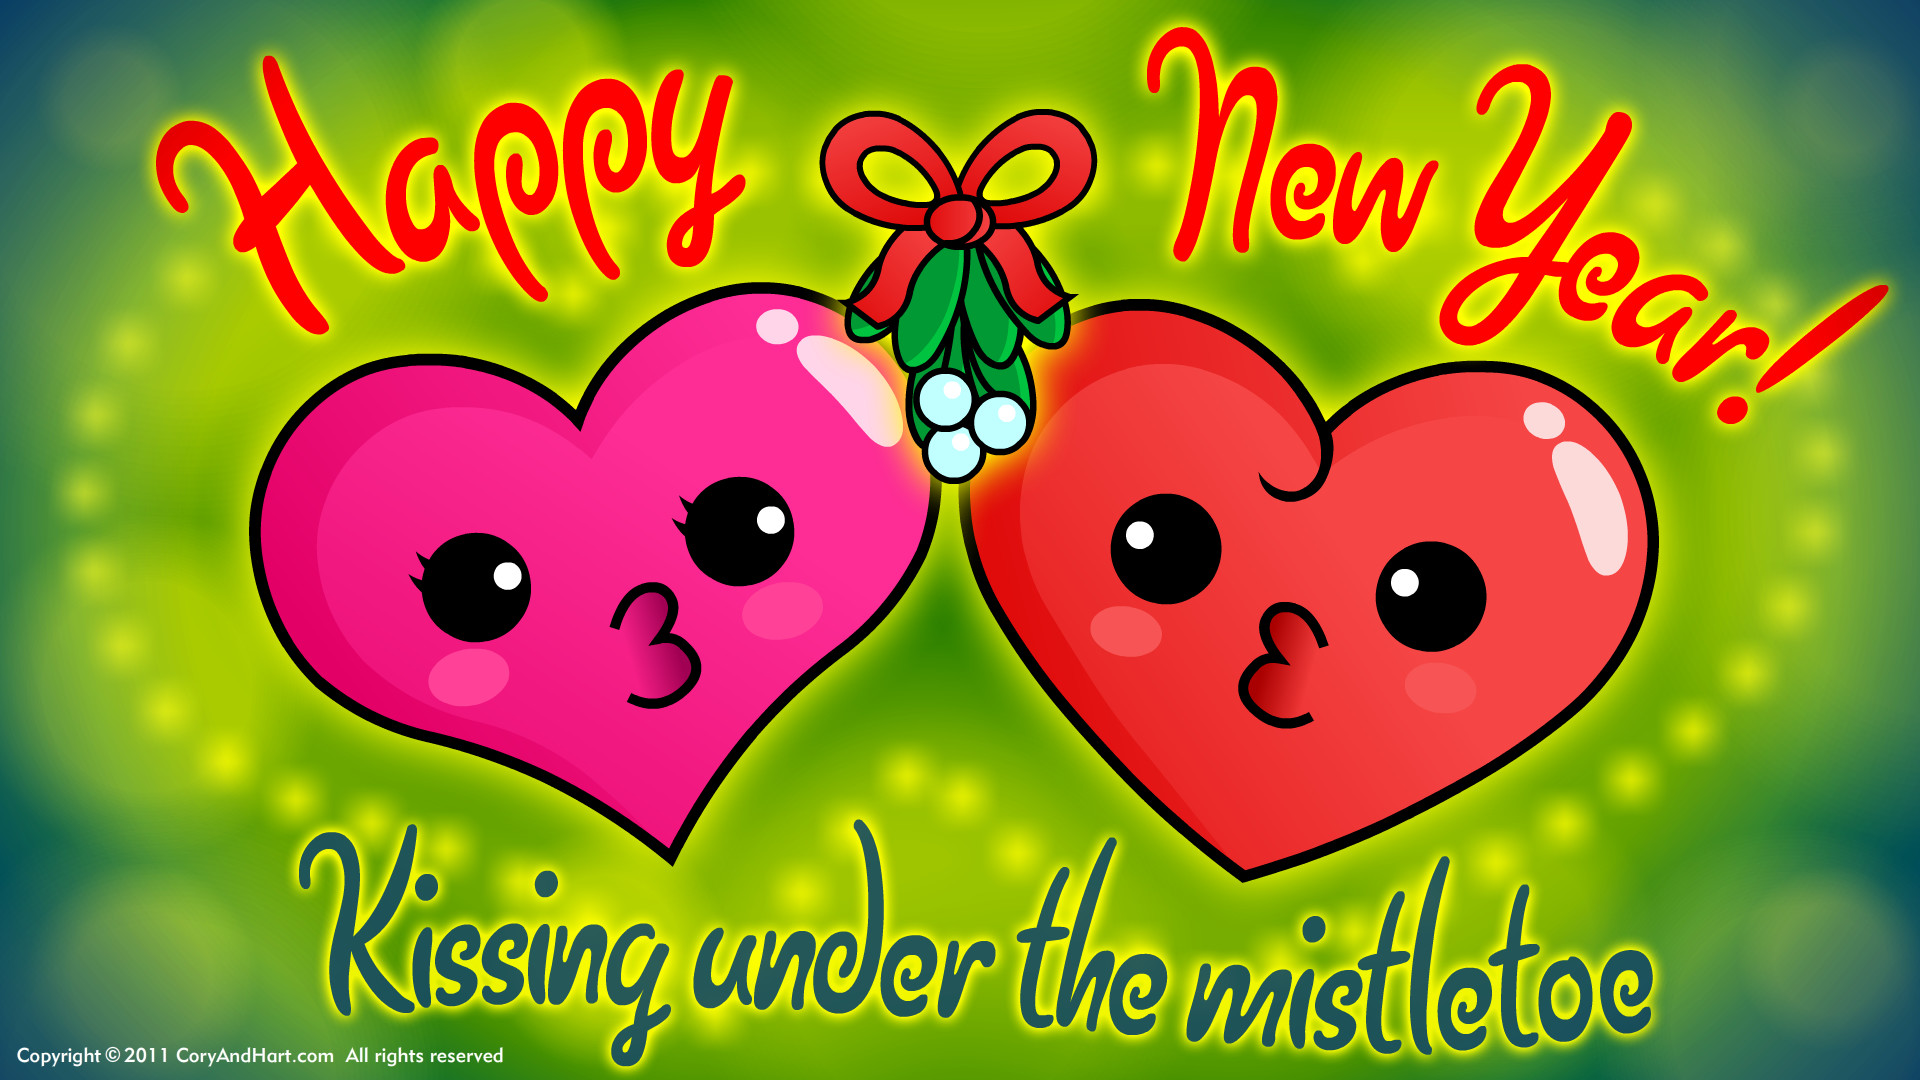 1920x1080 Happy new year! Kissing under the mistletoe wallpaper